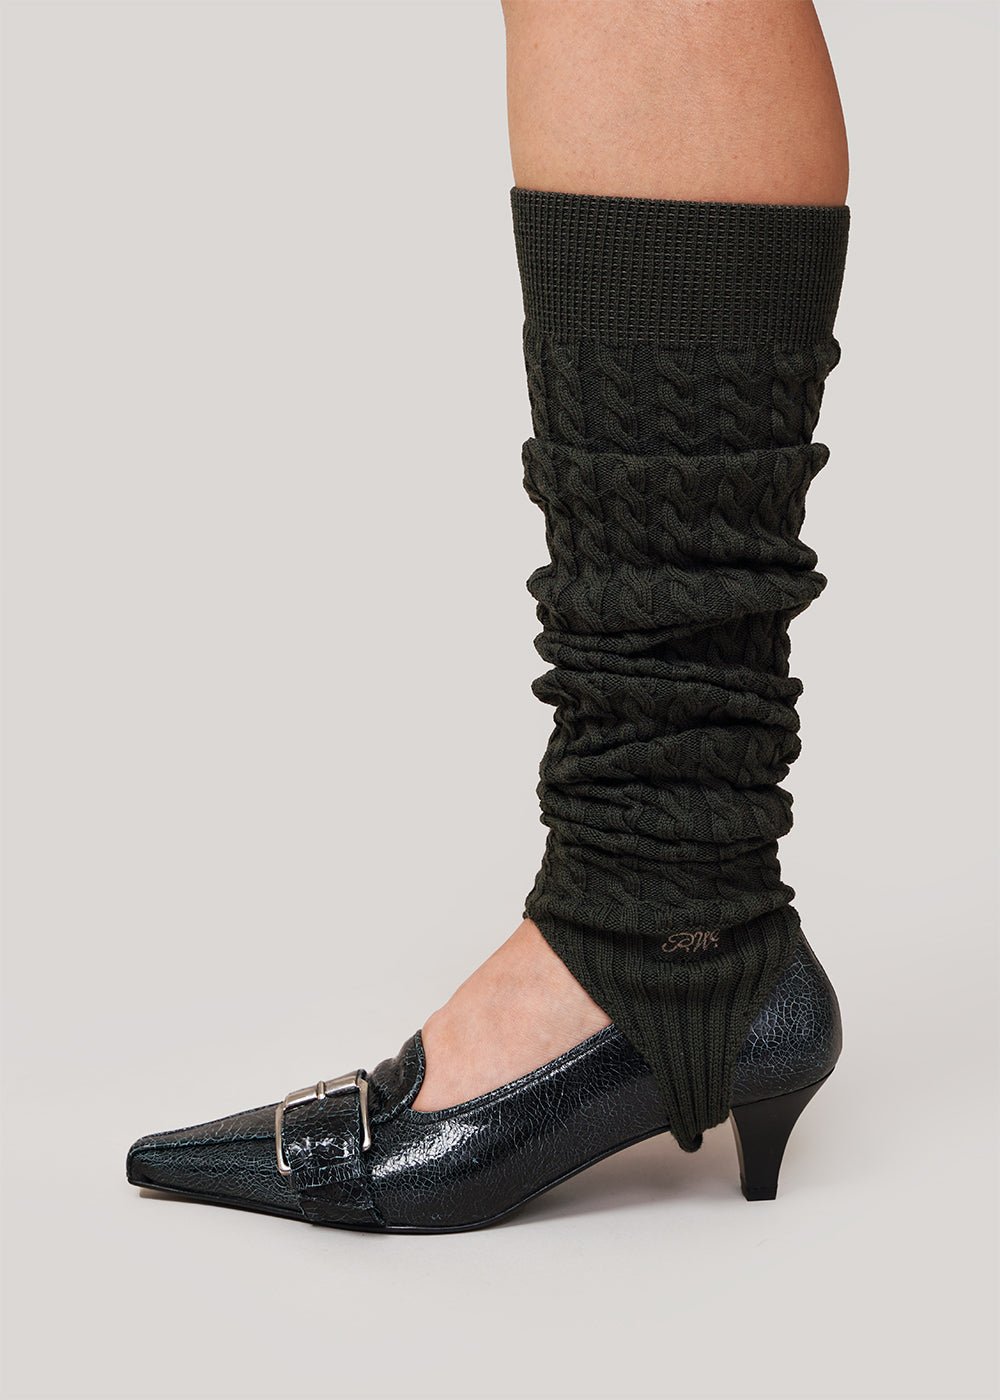 Paloma Wool Khaki Guenda Leg Warmers - New Classics Studios Sustainable Ethical Fashion Canada